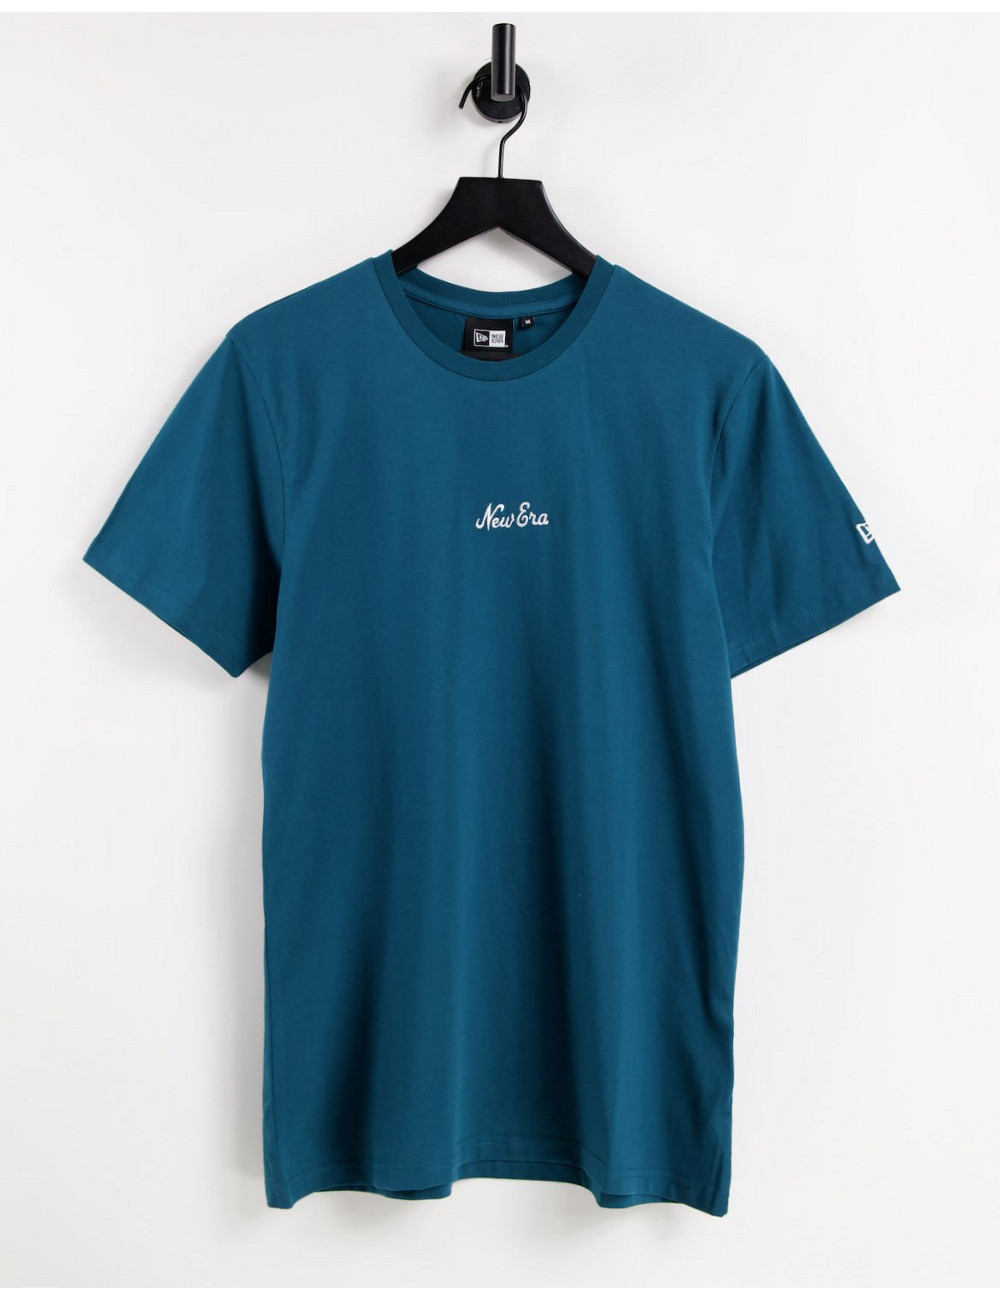 New Era script t-shirt in blue